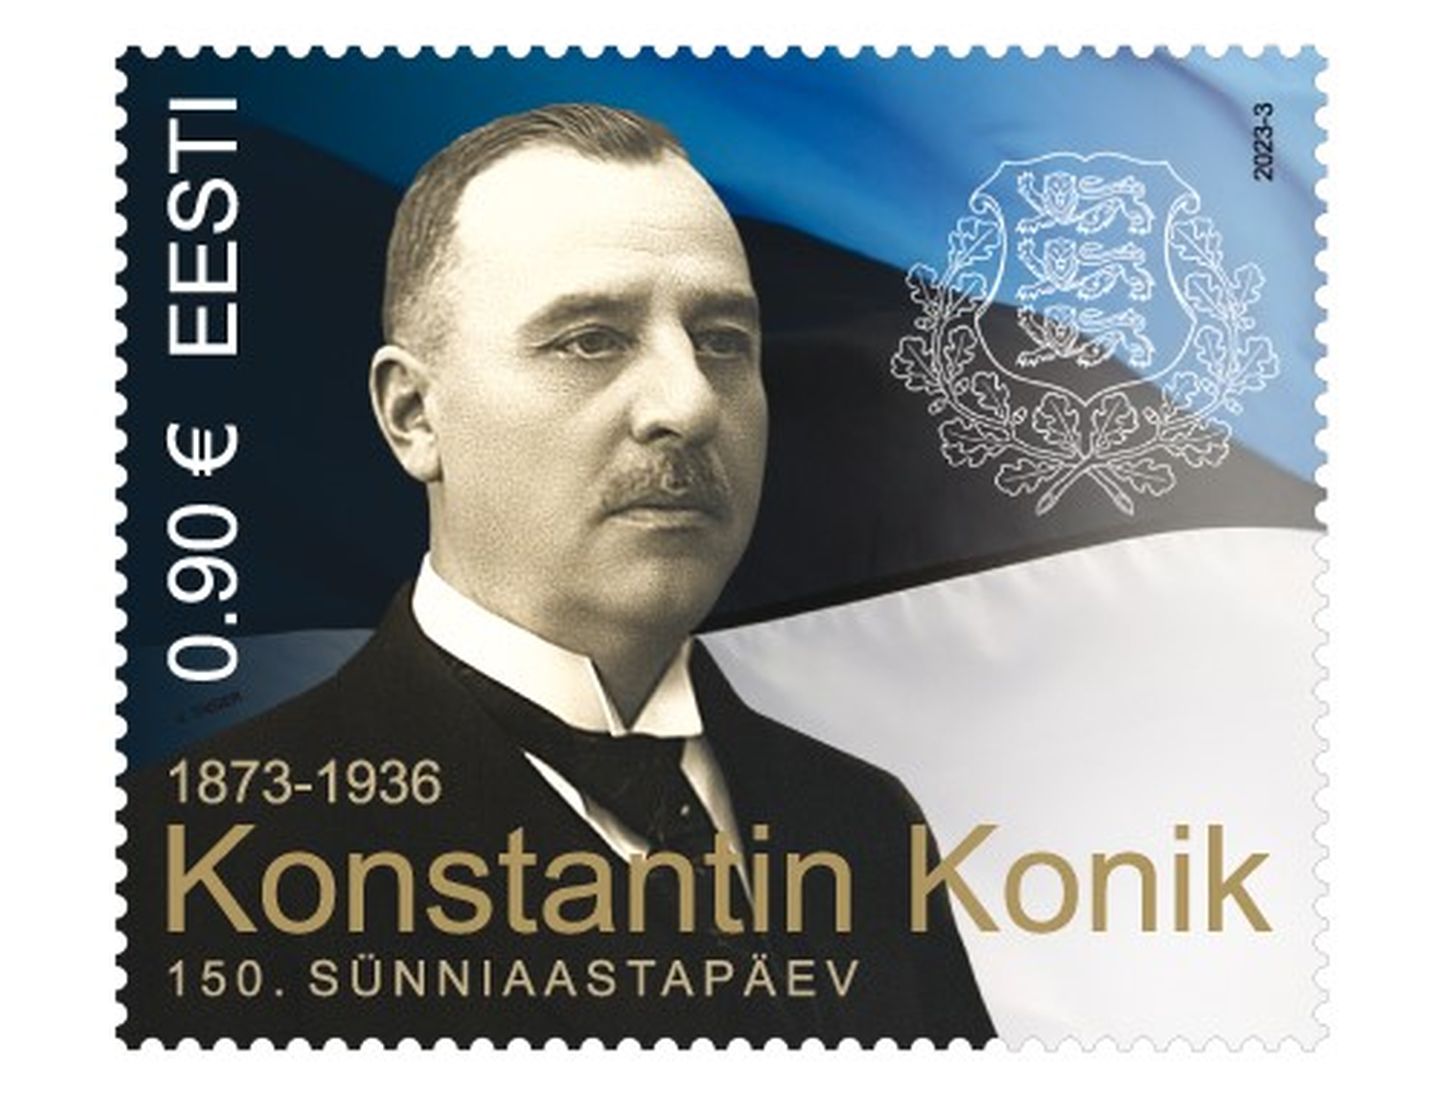 Konstantin Konik postmargil.